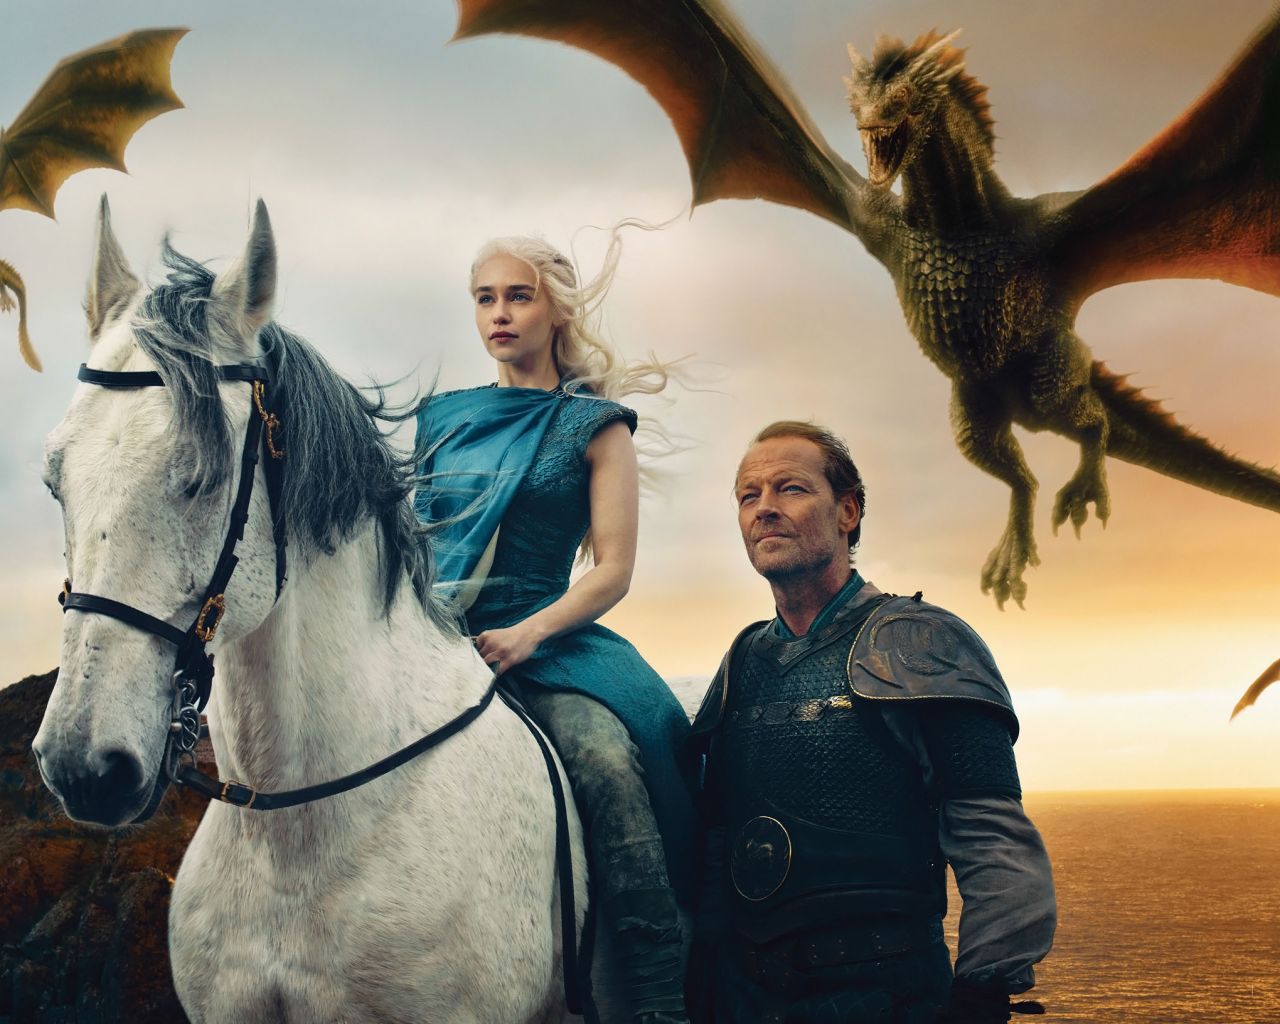 emilia clarke, драконы, game of thrones, iain glen, jorah mormont, daenerys targaryen